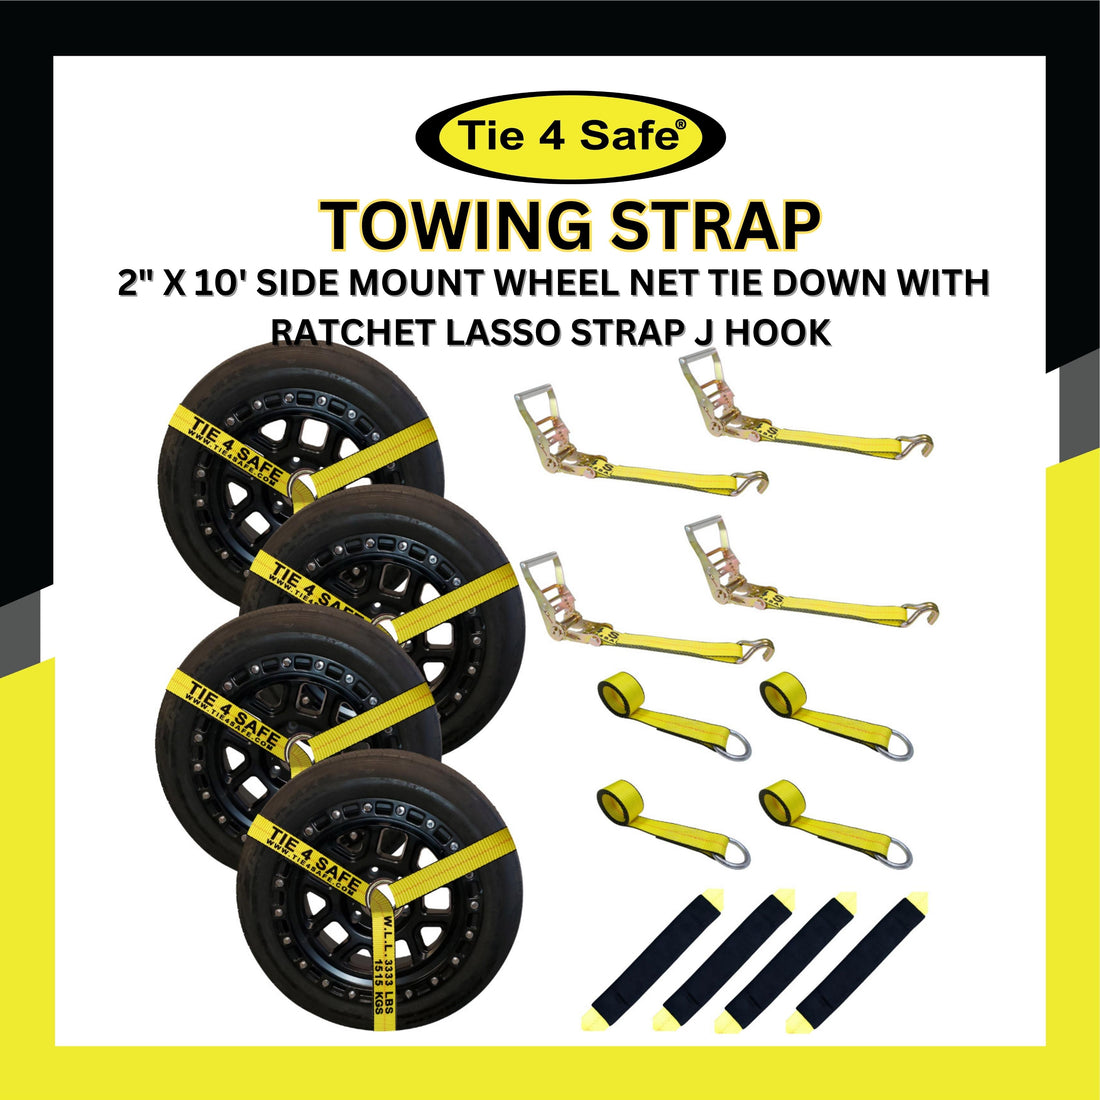 USA 4 Pack 2" x 10' Side Mount Wheel Net Tie Down With Ratchet Lasso Strap J Hook